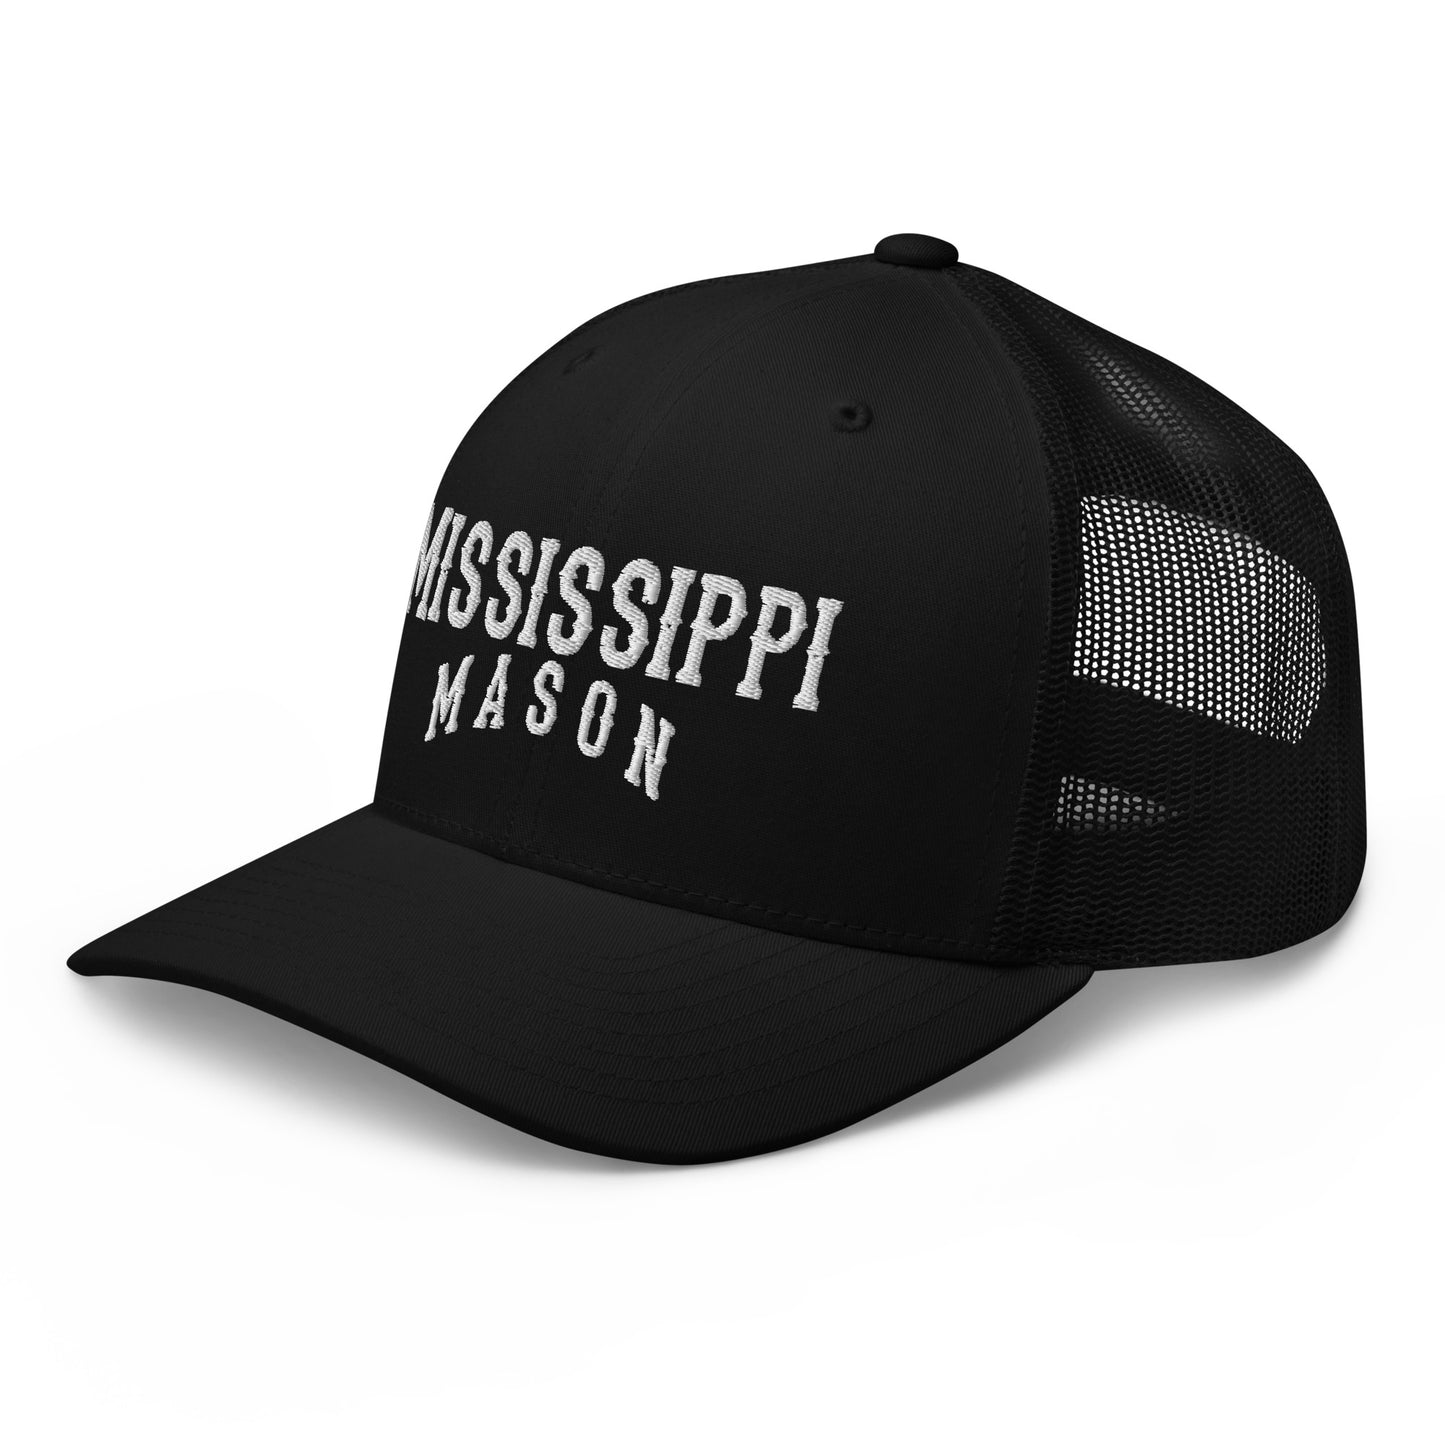 Mississippi Mason Trucker Cap